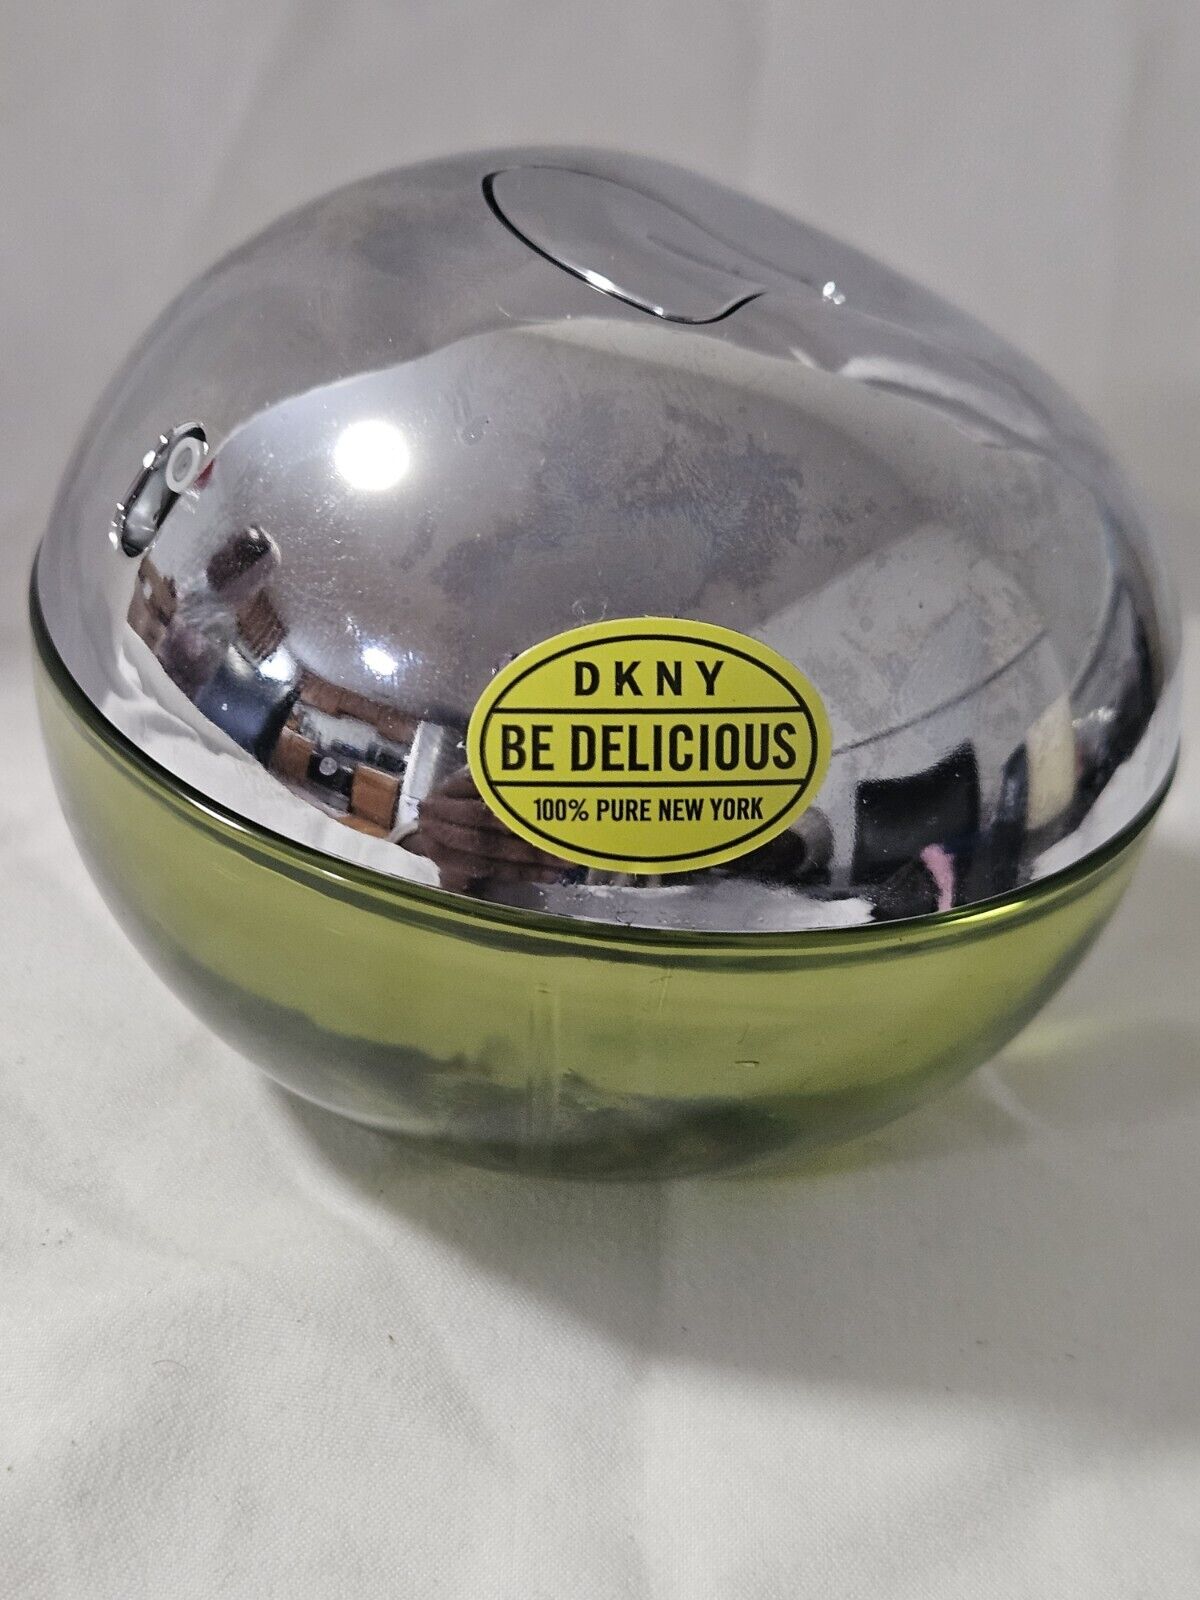 DKNY Donna Karan Be Delicious 3.4 Fl oz Eau de Parfum Perfume Spray